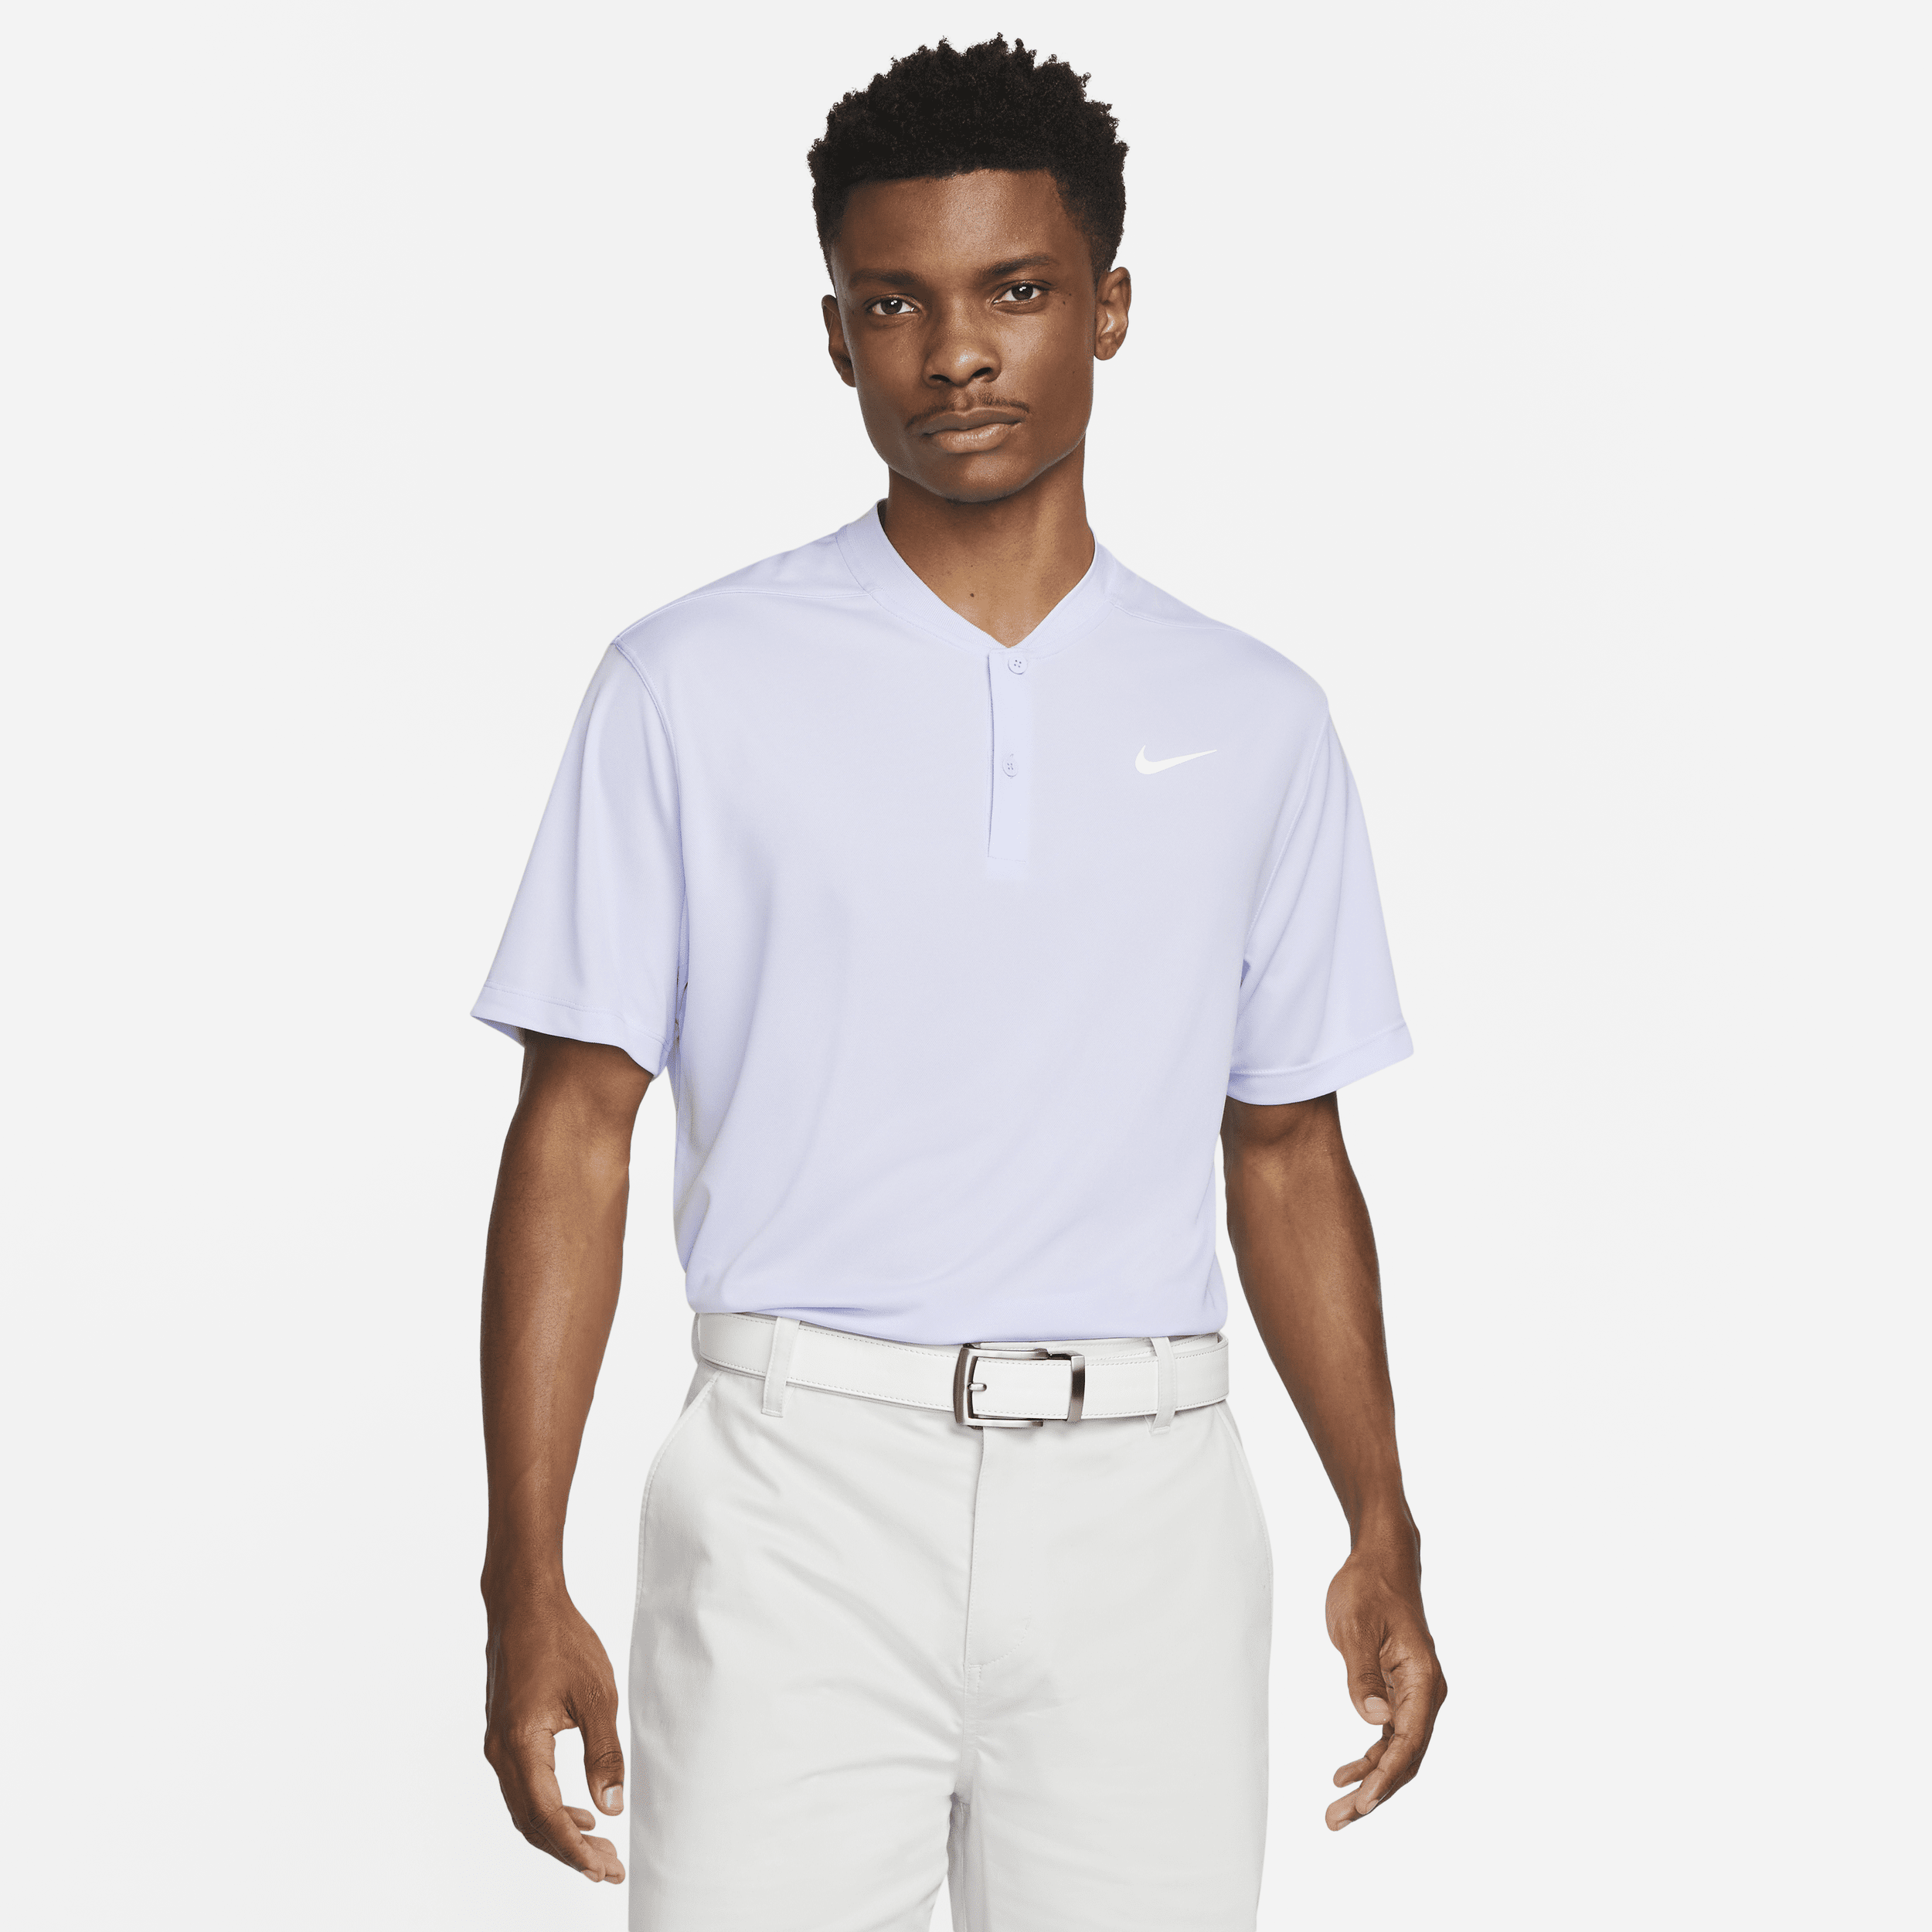 Nike Men's Dri-fit Victory Golf Polo In Purple